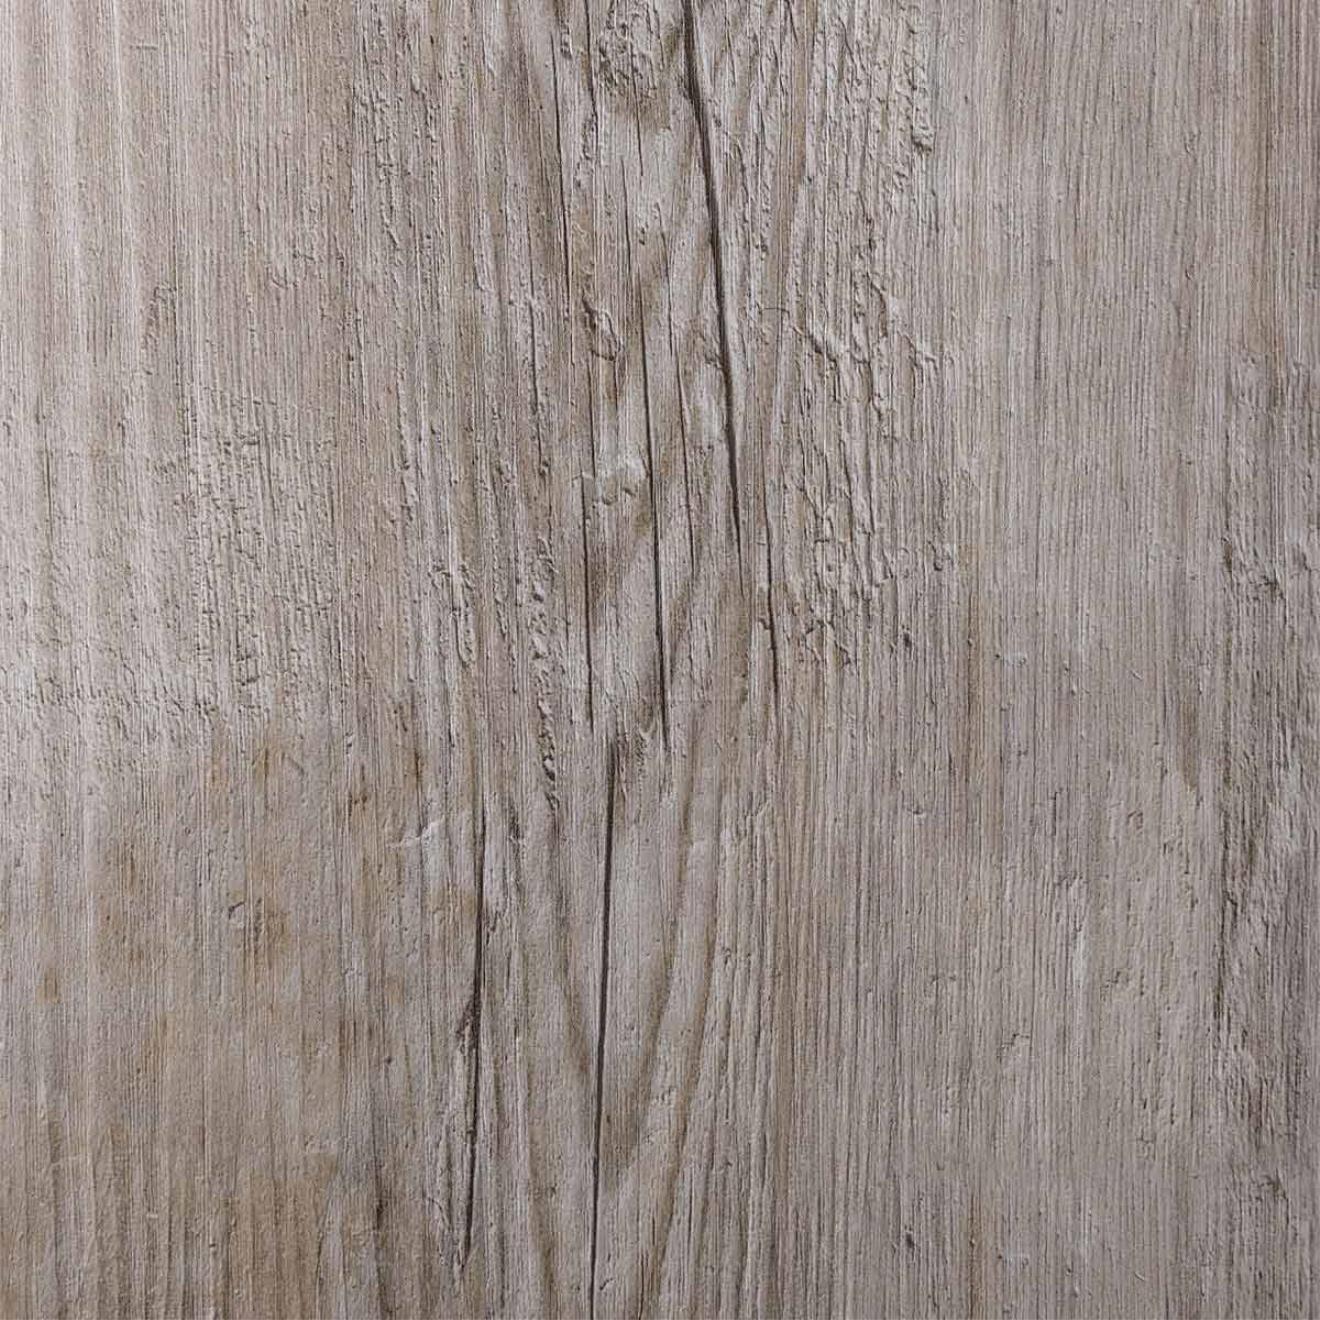 Hydro Step 5G Click LVT Flooring Grey Oak with Underlay